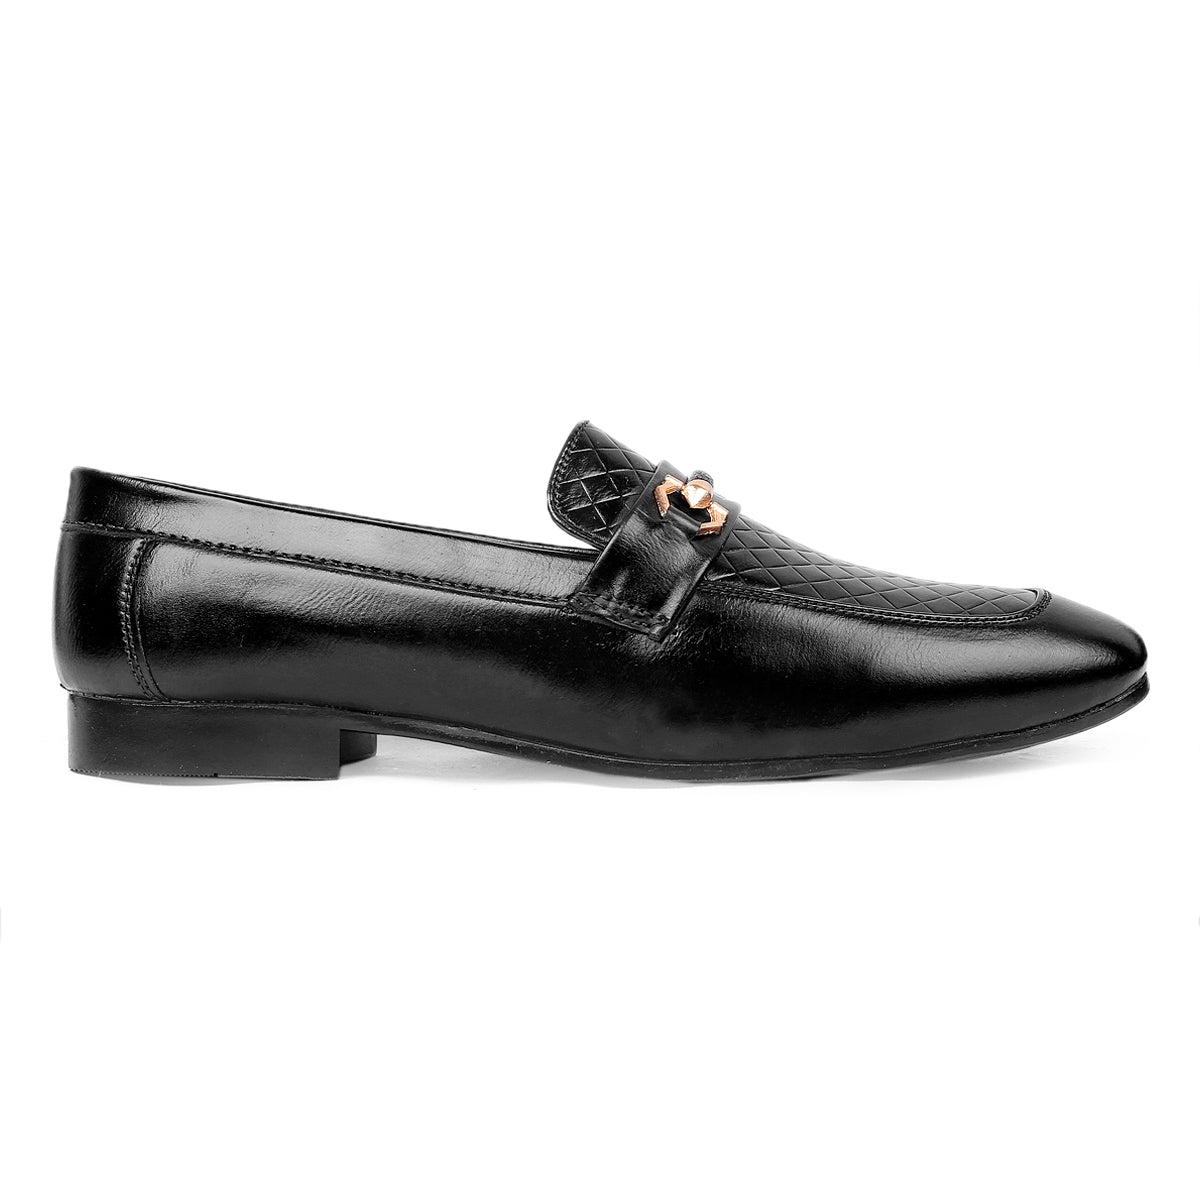 Jack Marc Men's Stylish Formal Faux Leather moccasins slip-on shoes